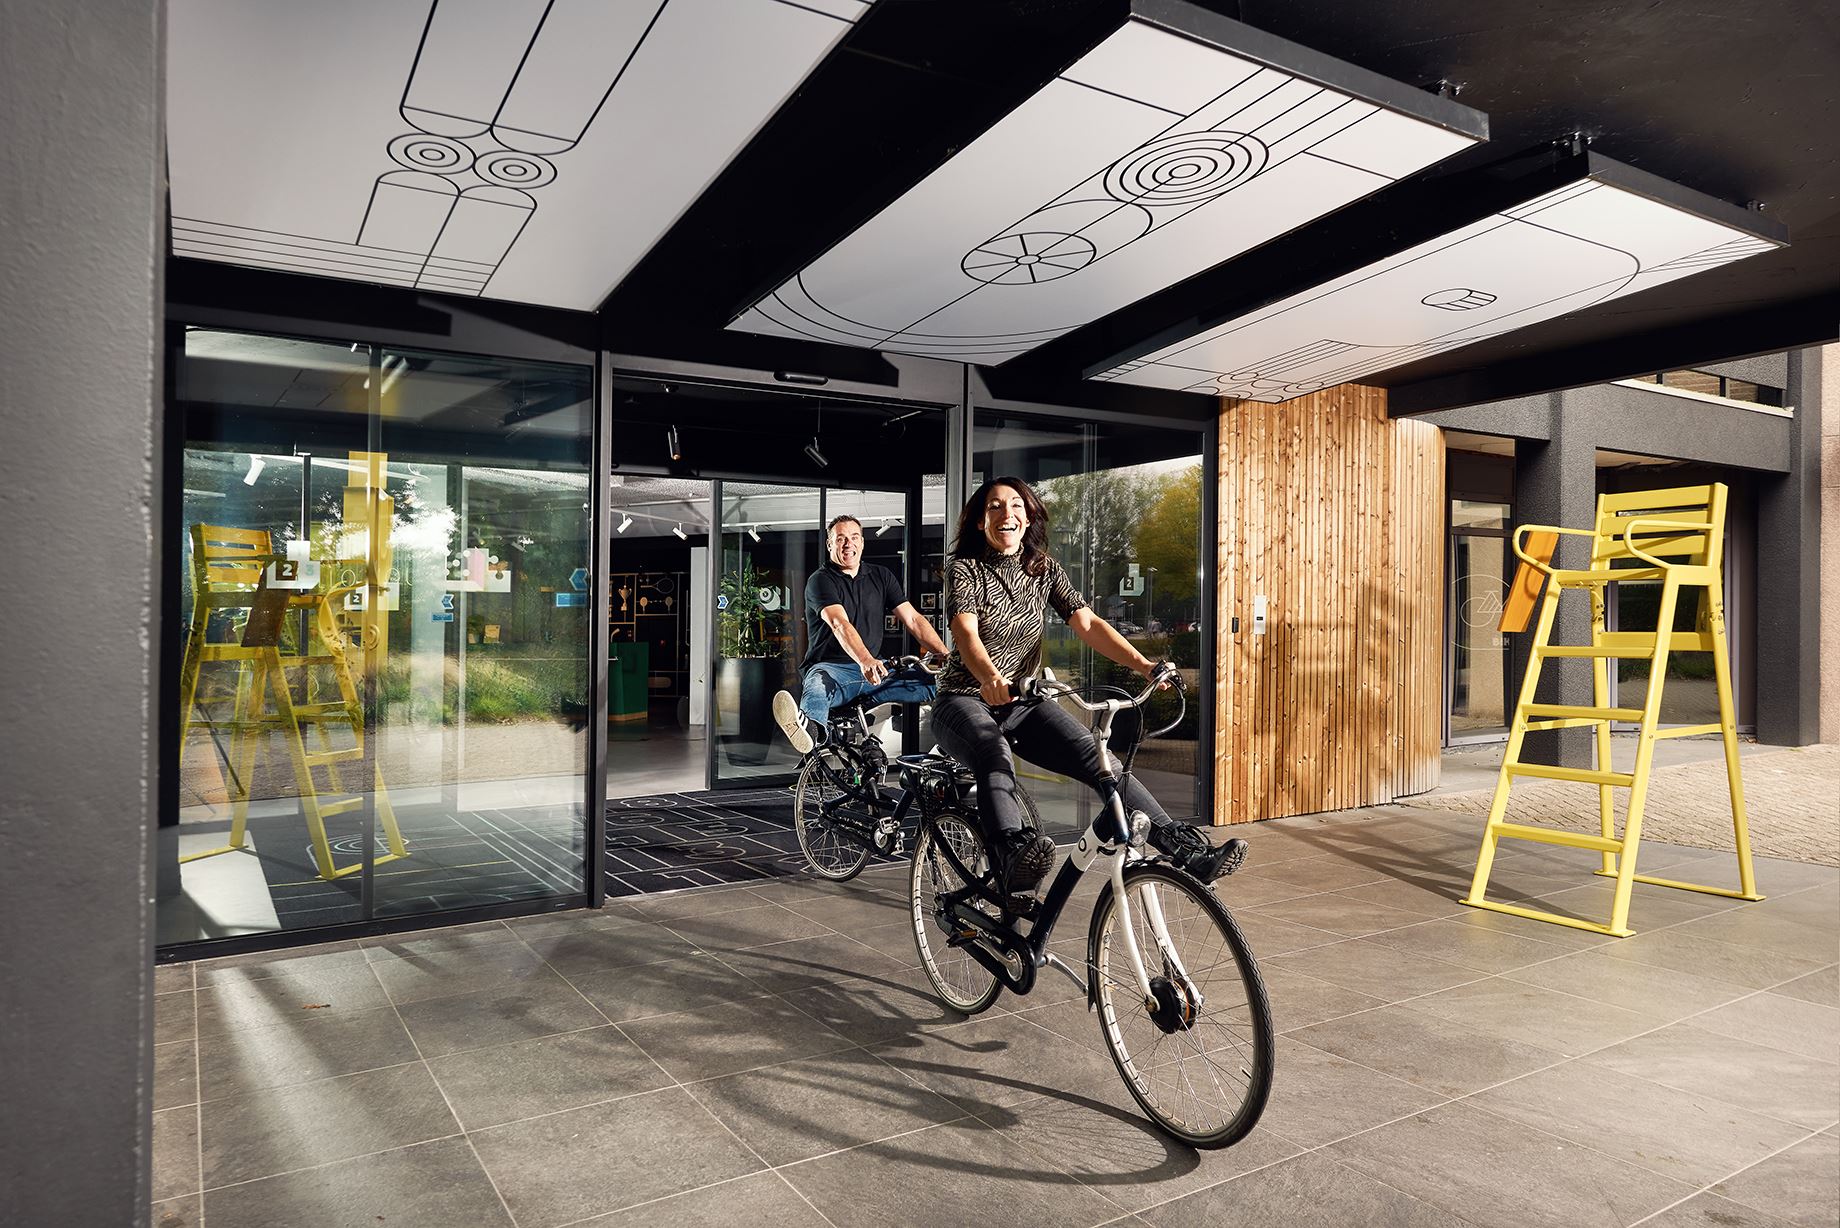 hup-hotel-sport-fiets-energieke-koppels